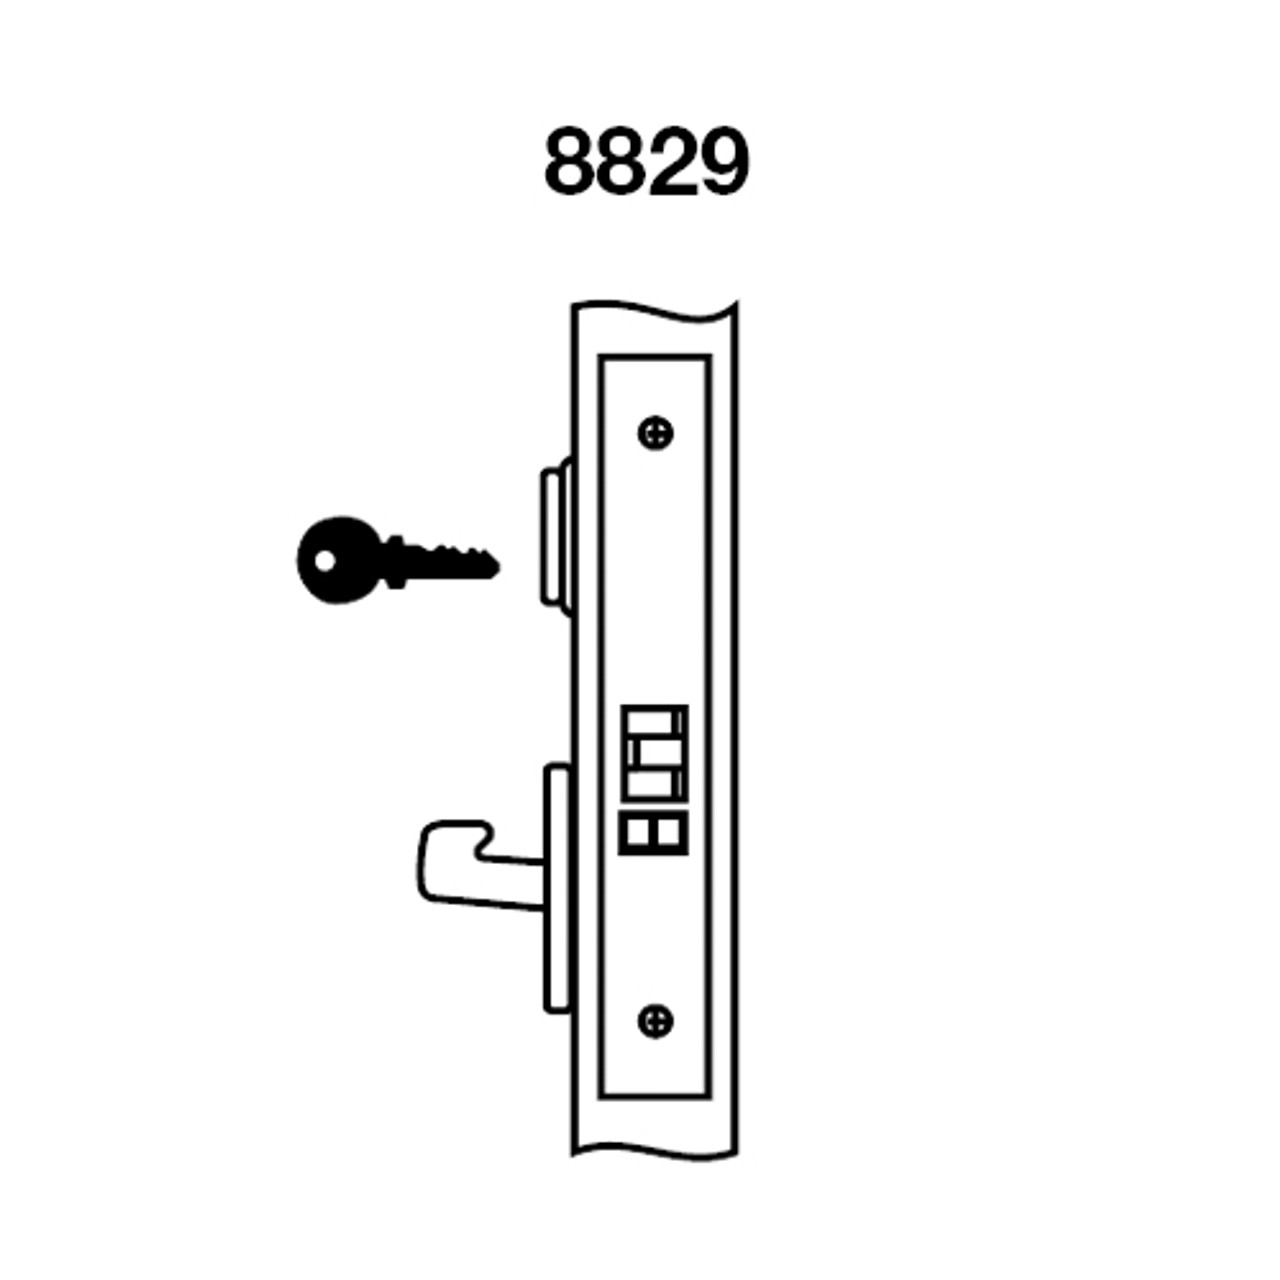 CRCN8829FL-618 Yale 8800FL Series Single Cylinder Mortise Closet Locks with Carmel Lever in Bright Nickel